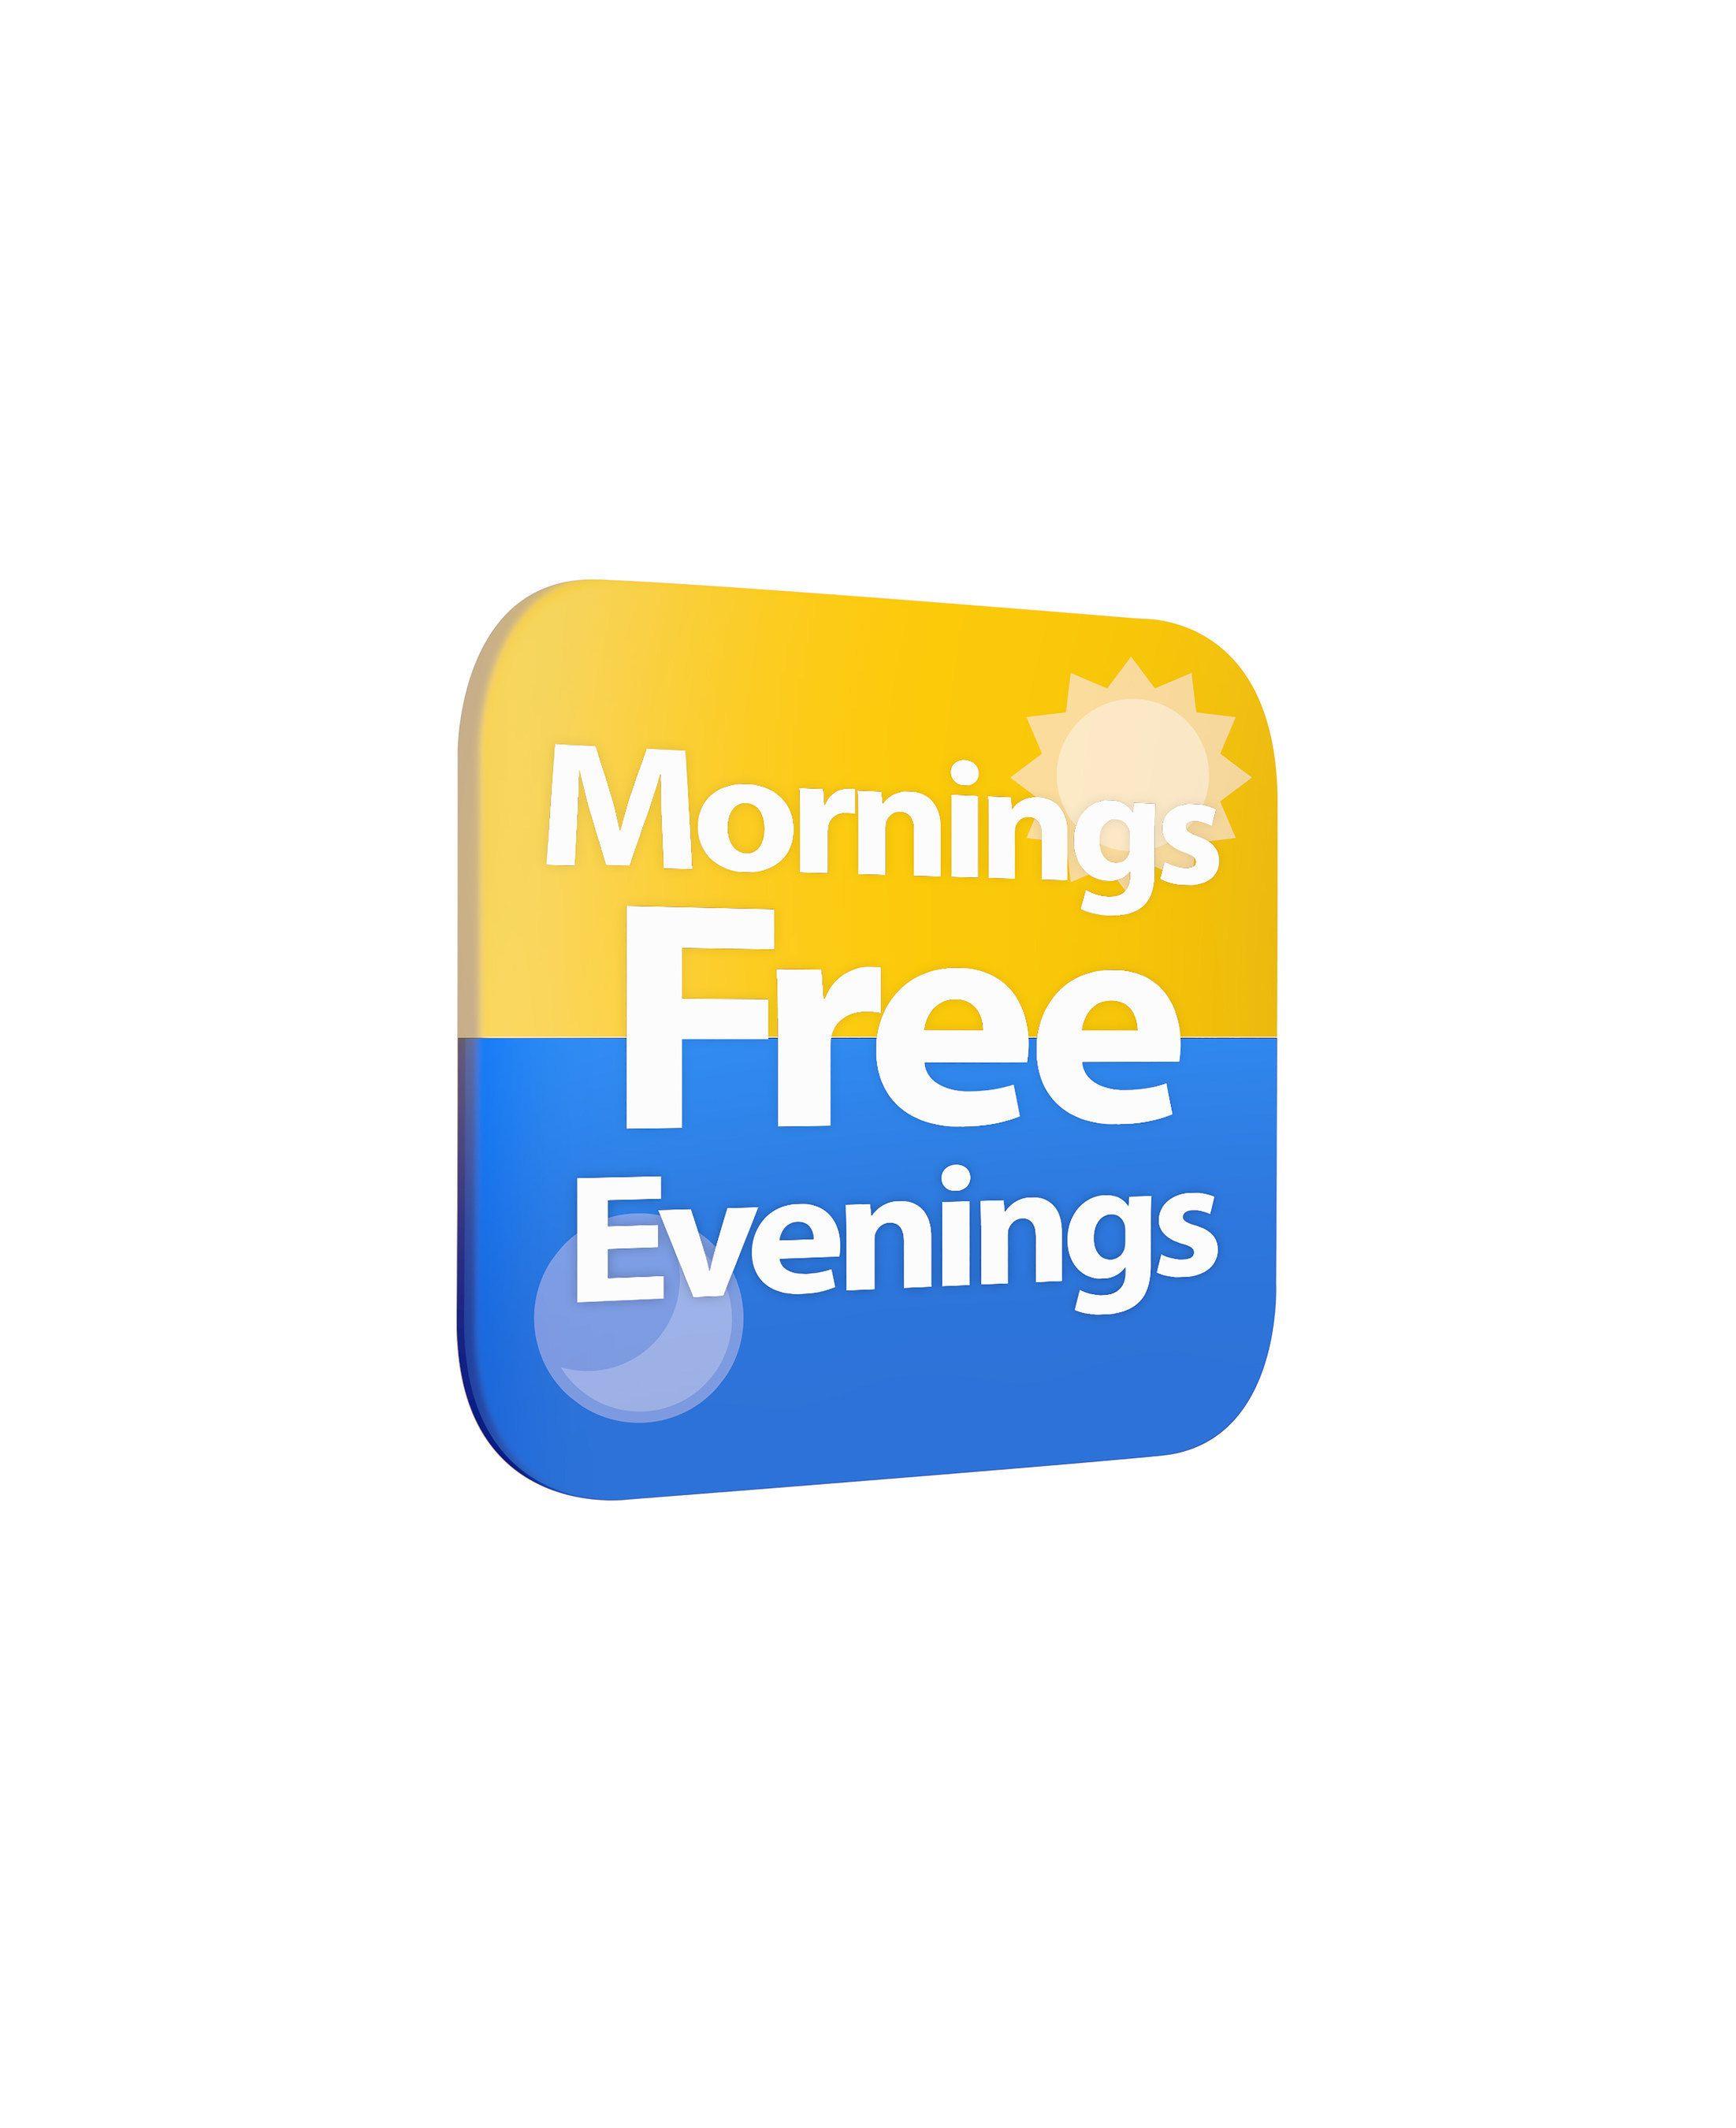 TXU Logo - TXU Energy Free Mornings and Evenings Benefits Texans During their ...